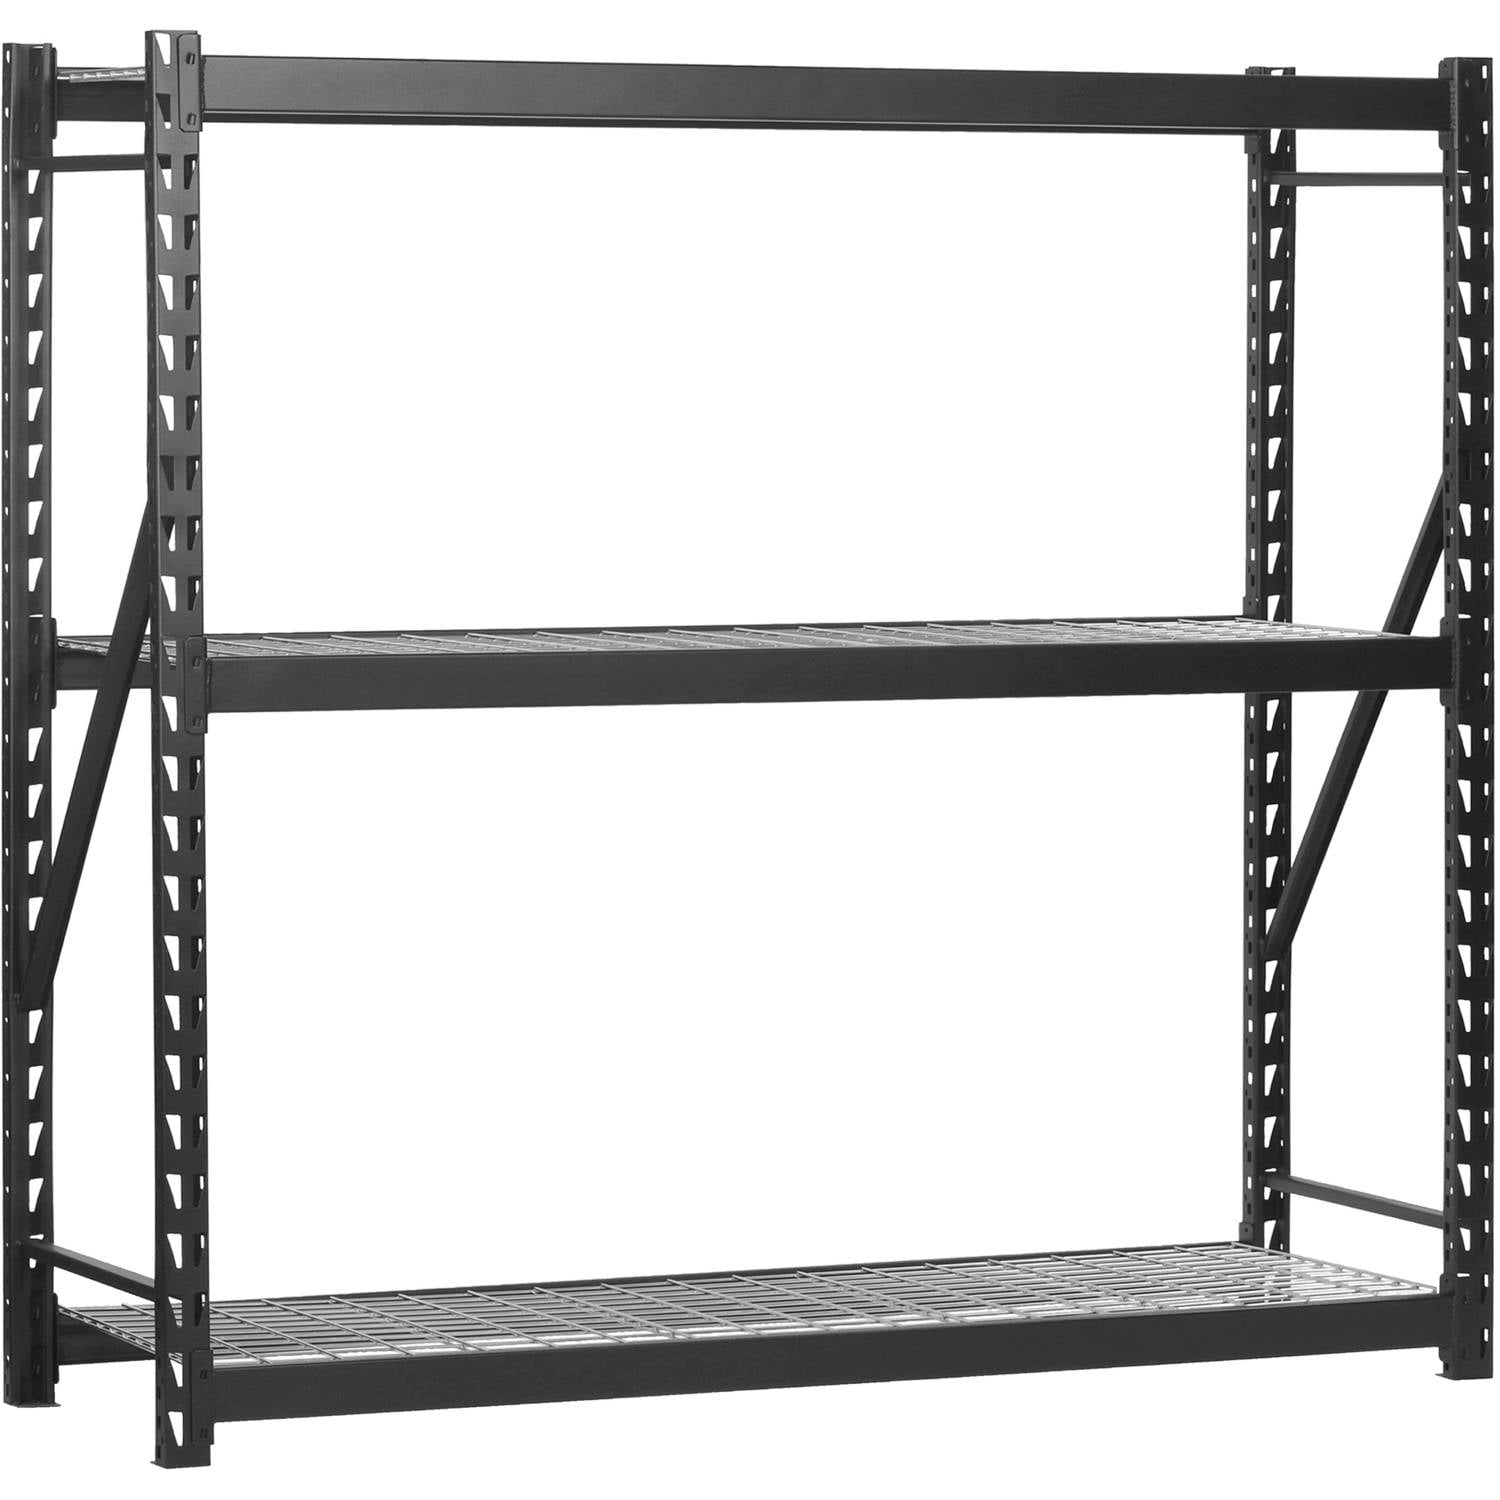 Steel Welded Storage Rack 150, Gorilla Rack Commercial Shelving